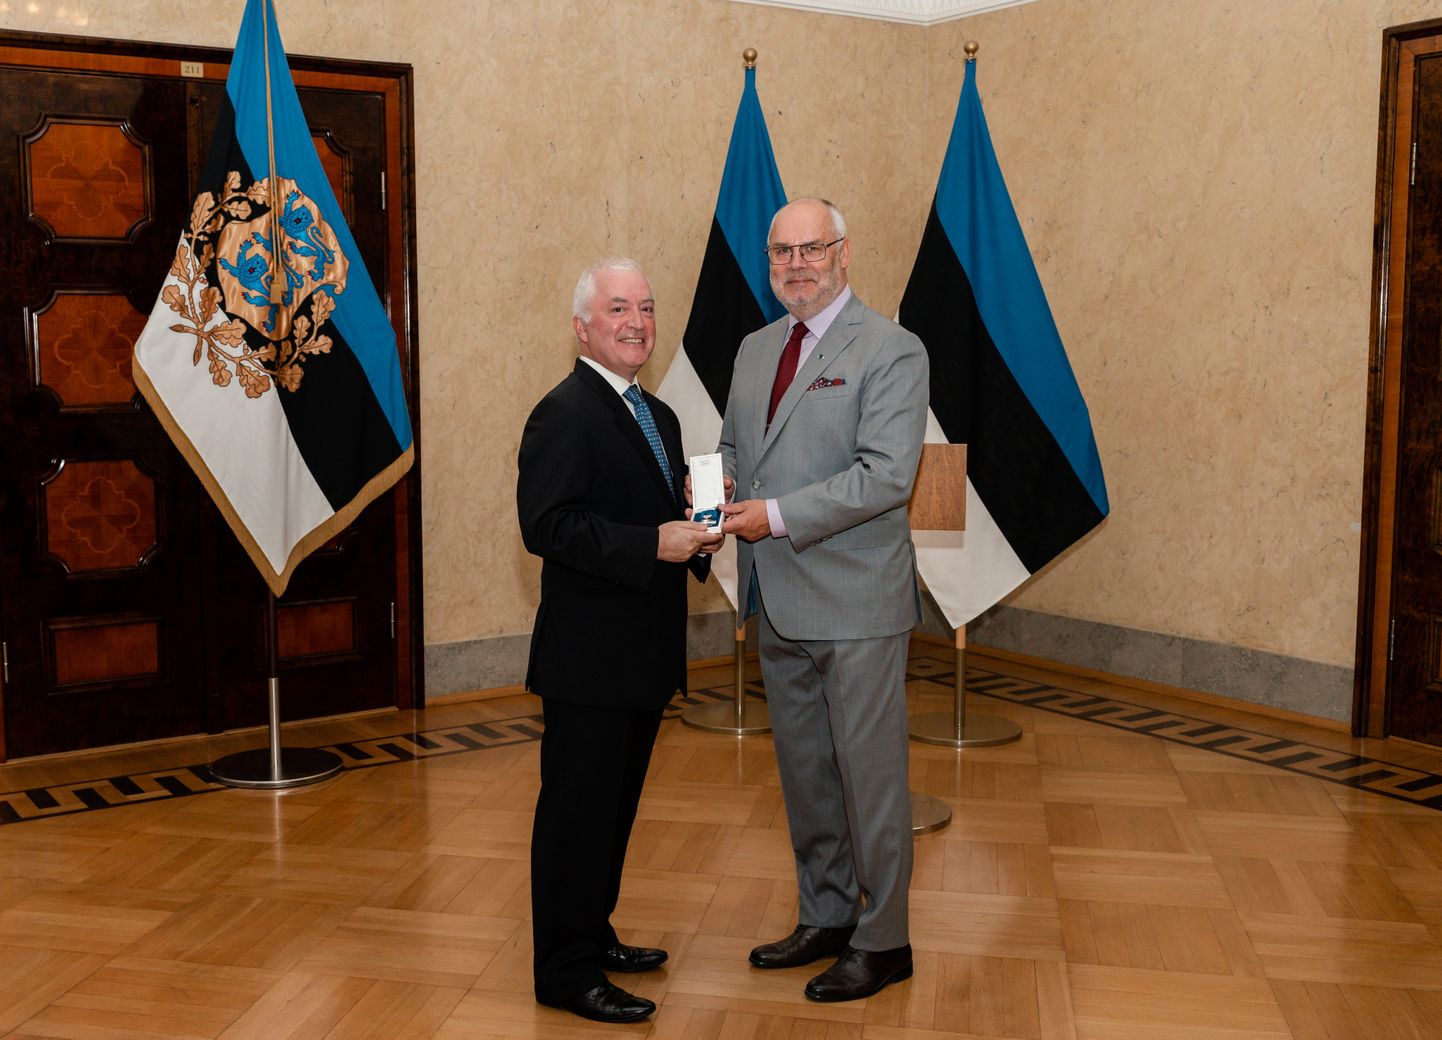 Президент Алар Карис вручил Крест Маарьямаа IV степени почетному консулу Эстонии в Чили Луису Фелипе Эрнсту Эдвардсу.